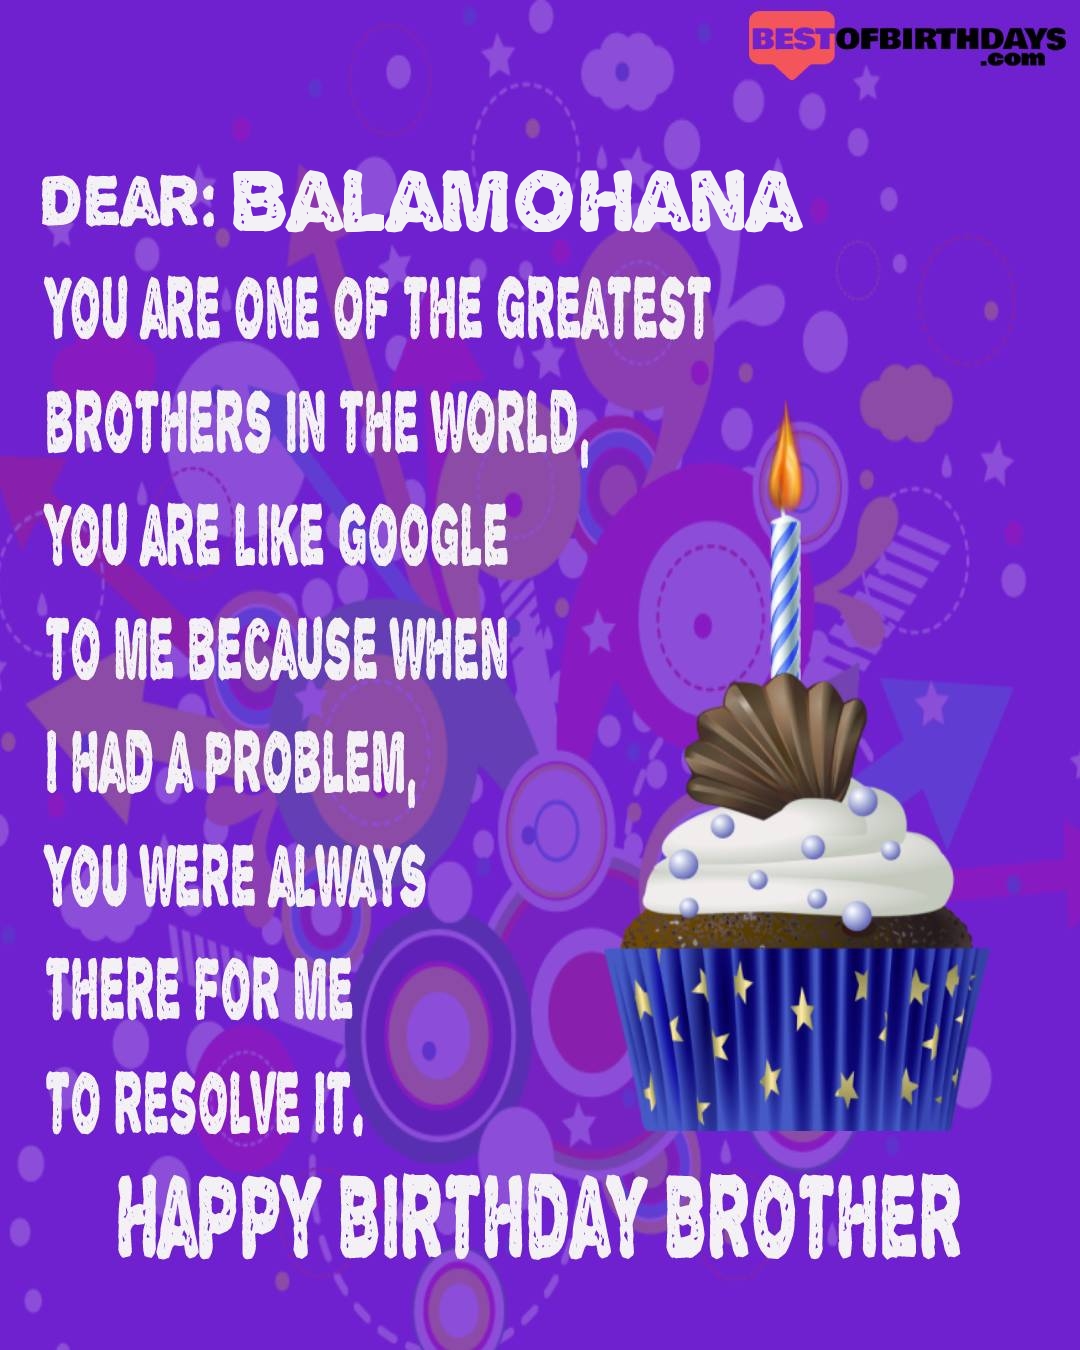 Happy birthday balamohana bhai brother bro